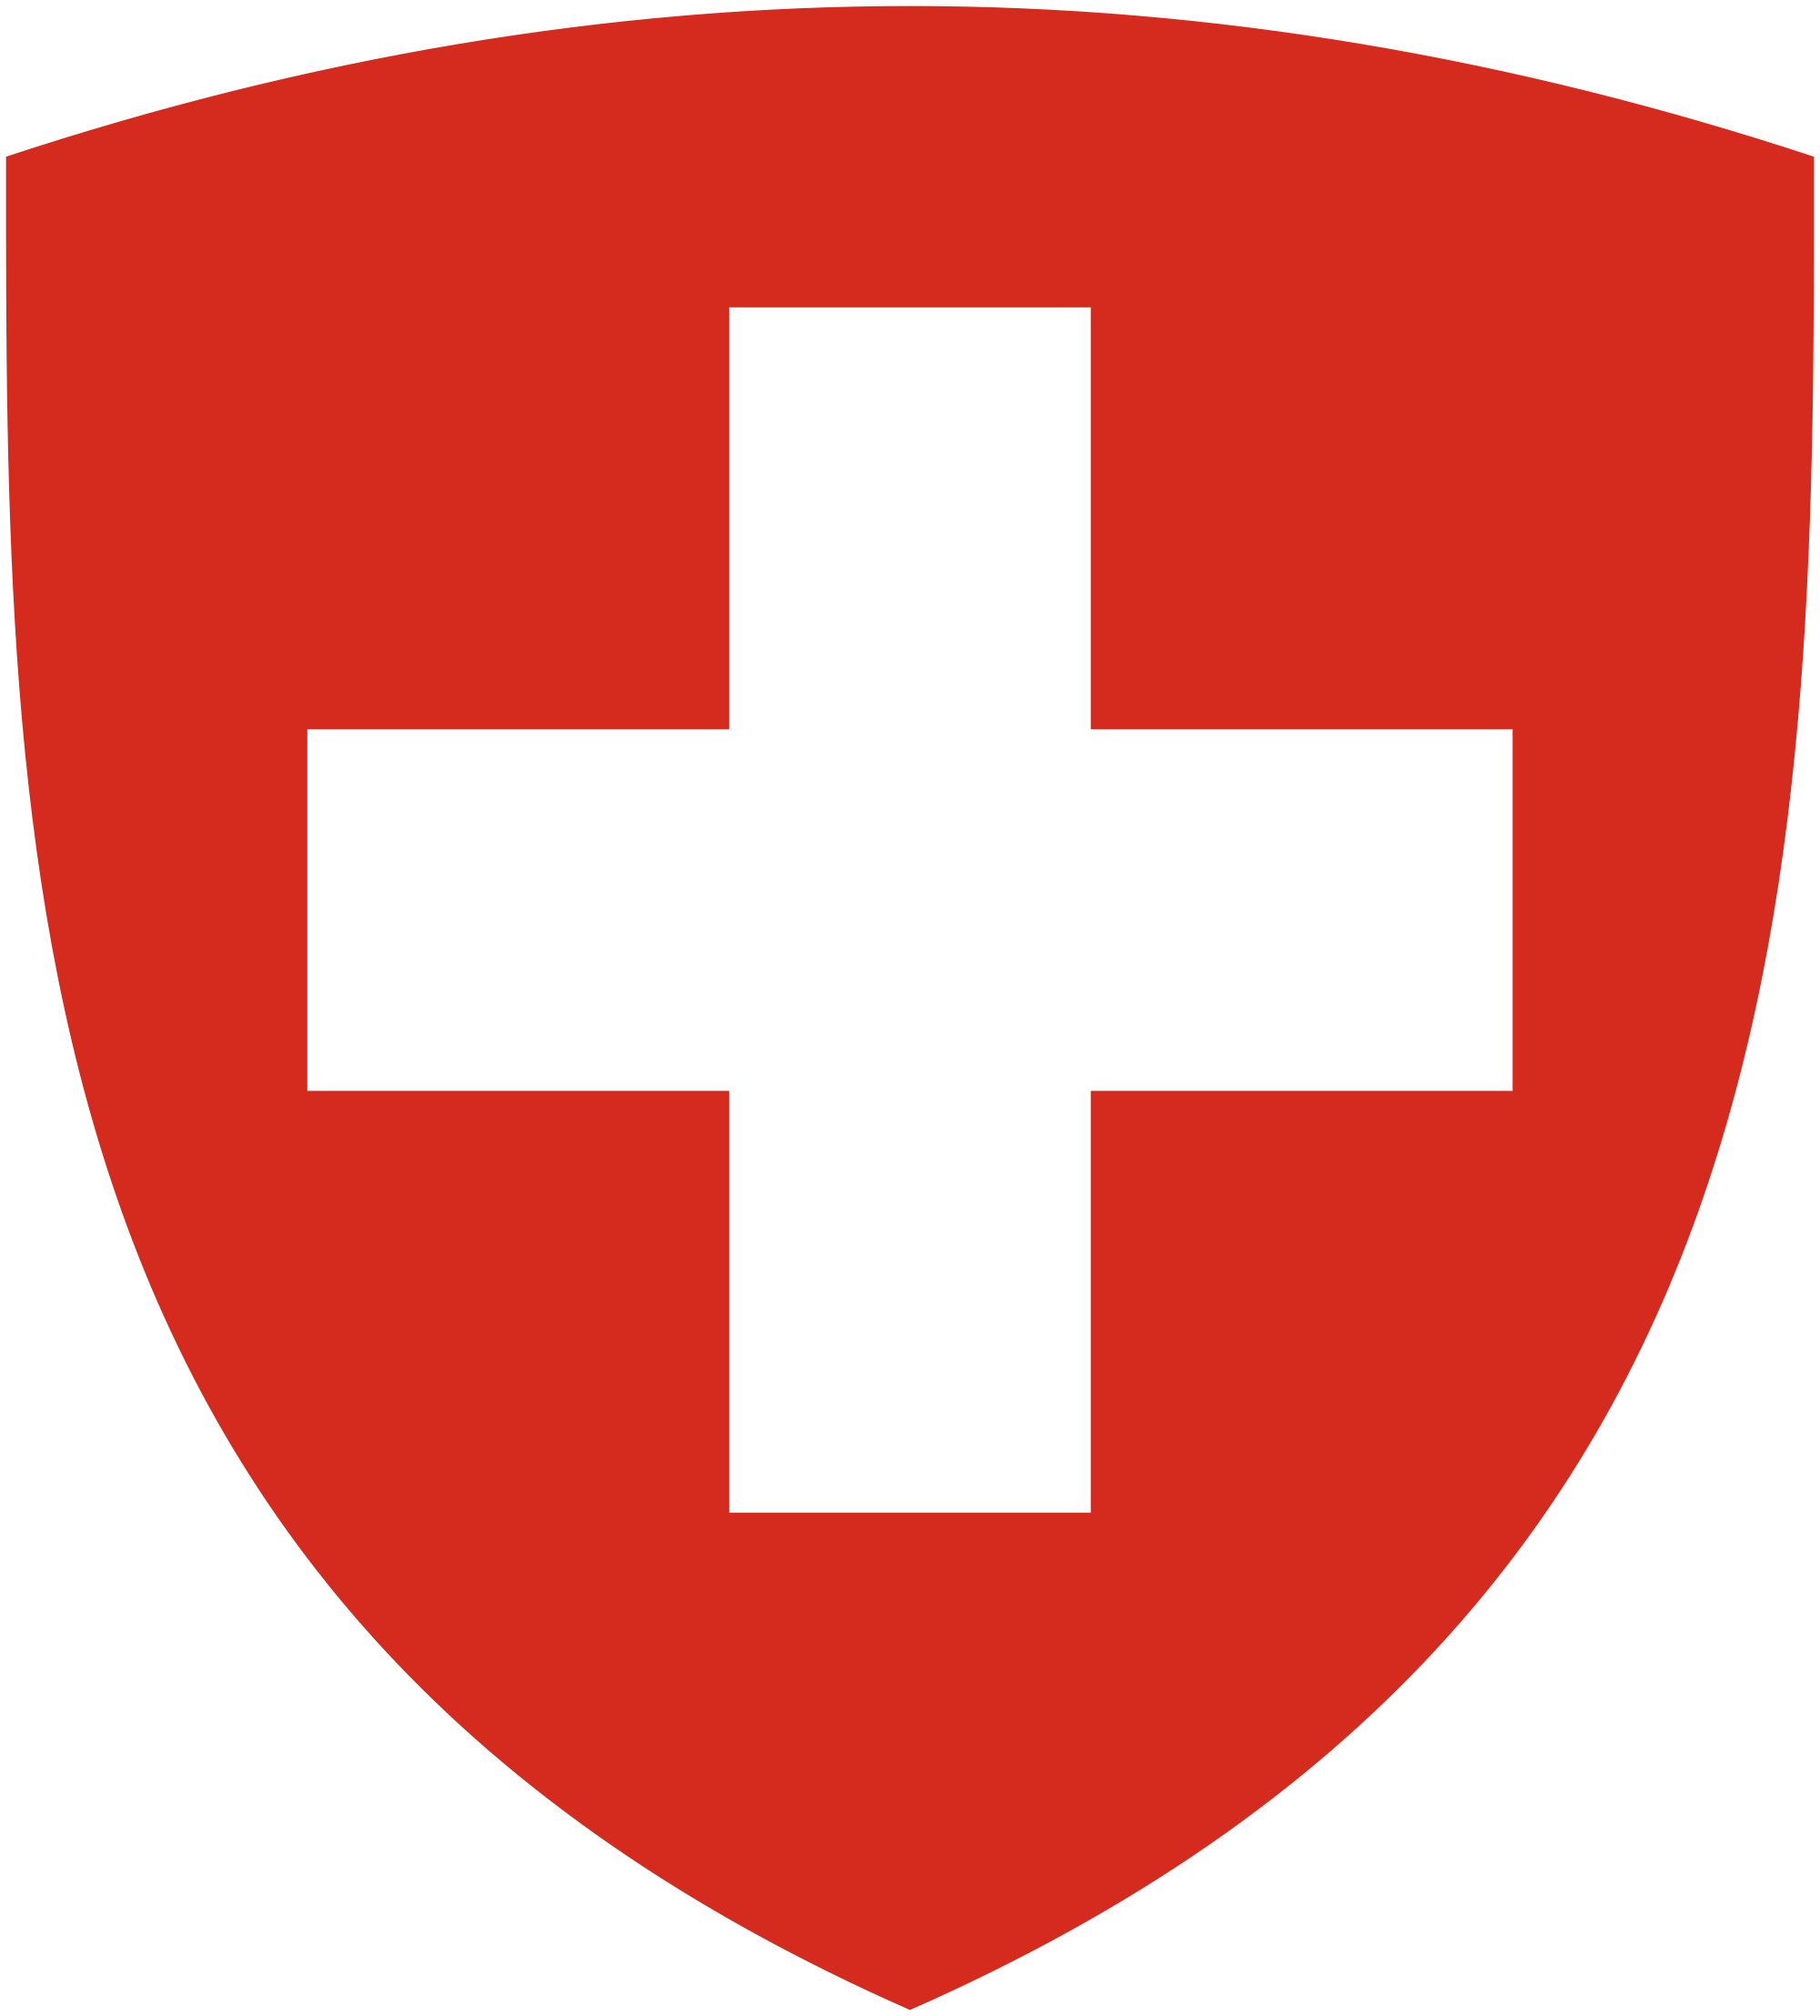 Emblem of Switzerland